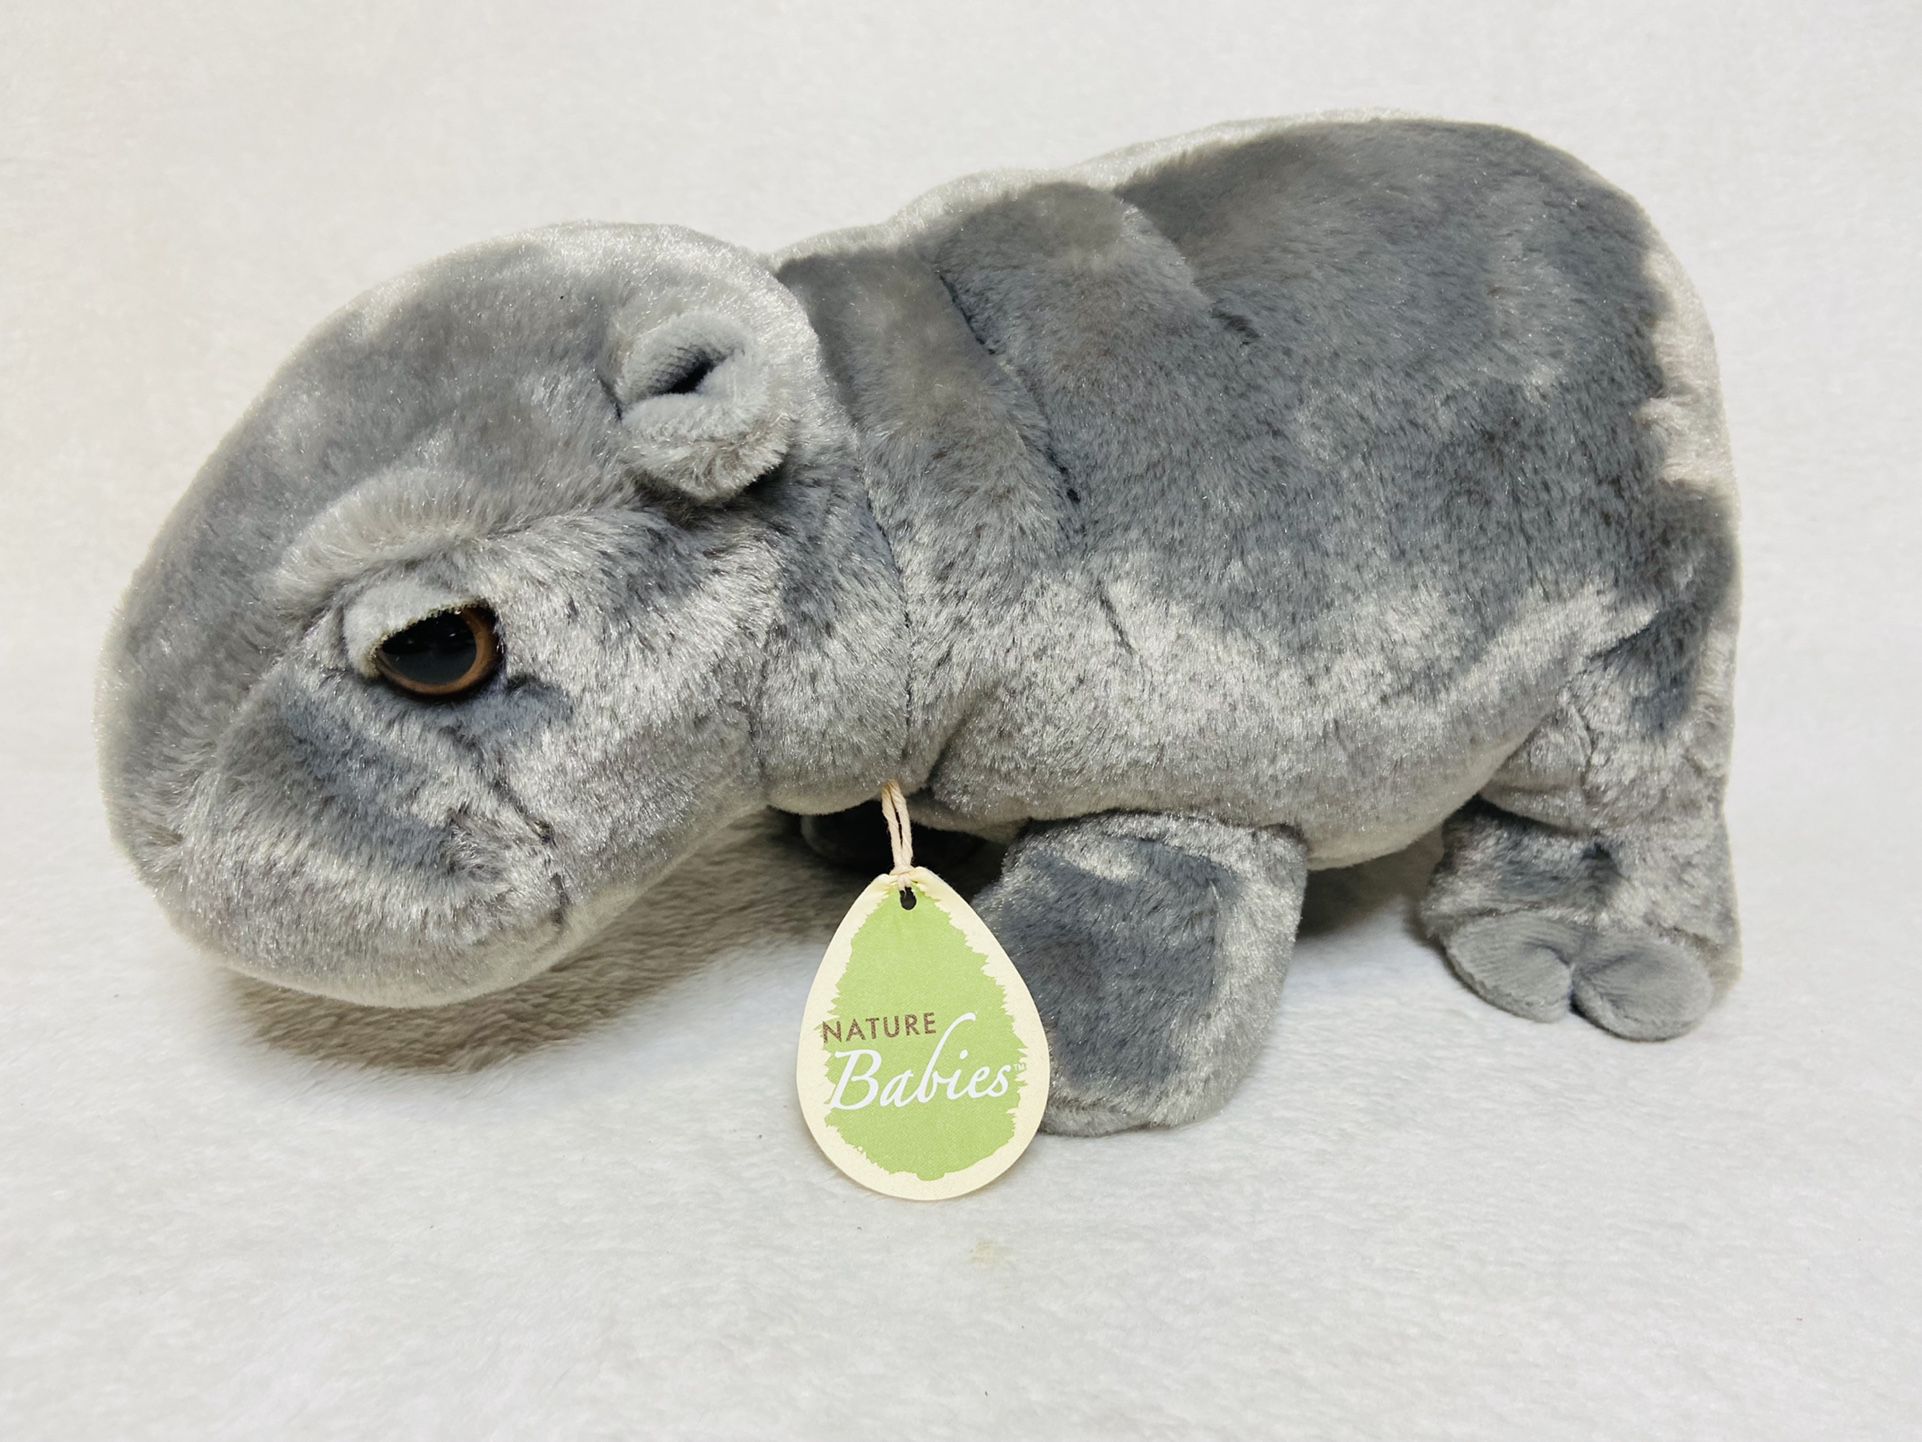 10" Aurora Nature Babies Hippo Plush Toy